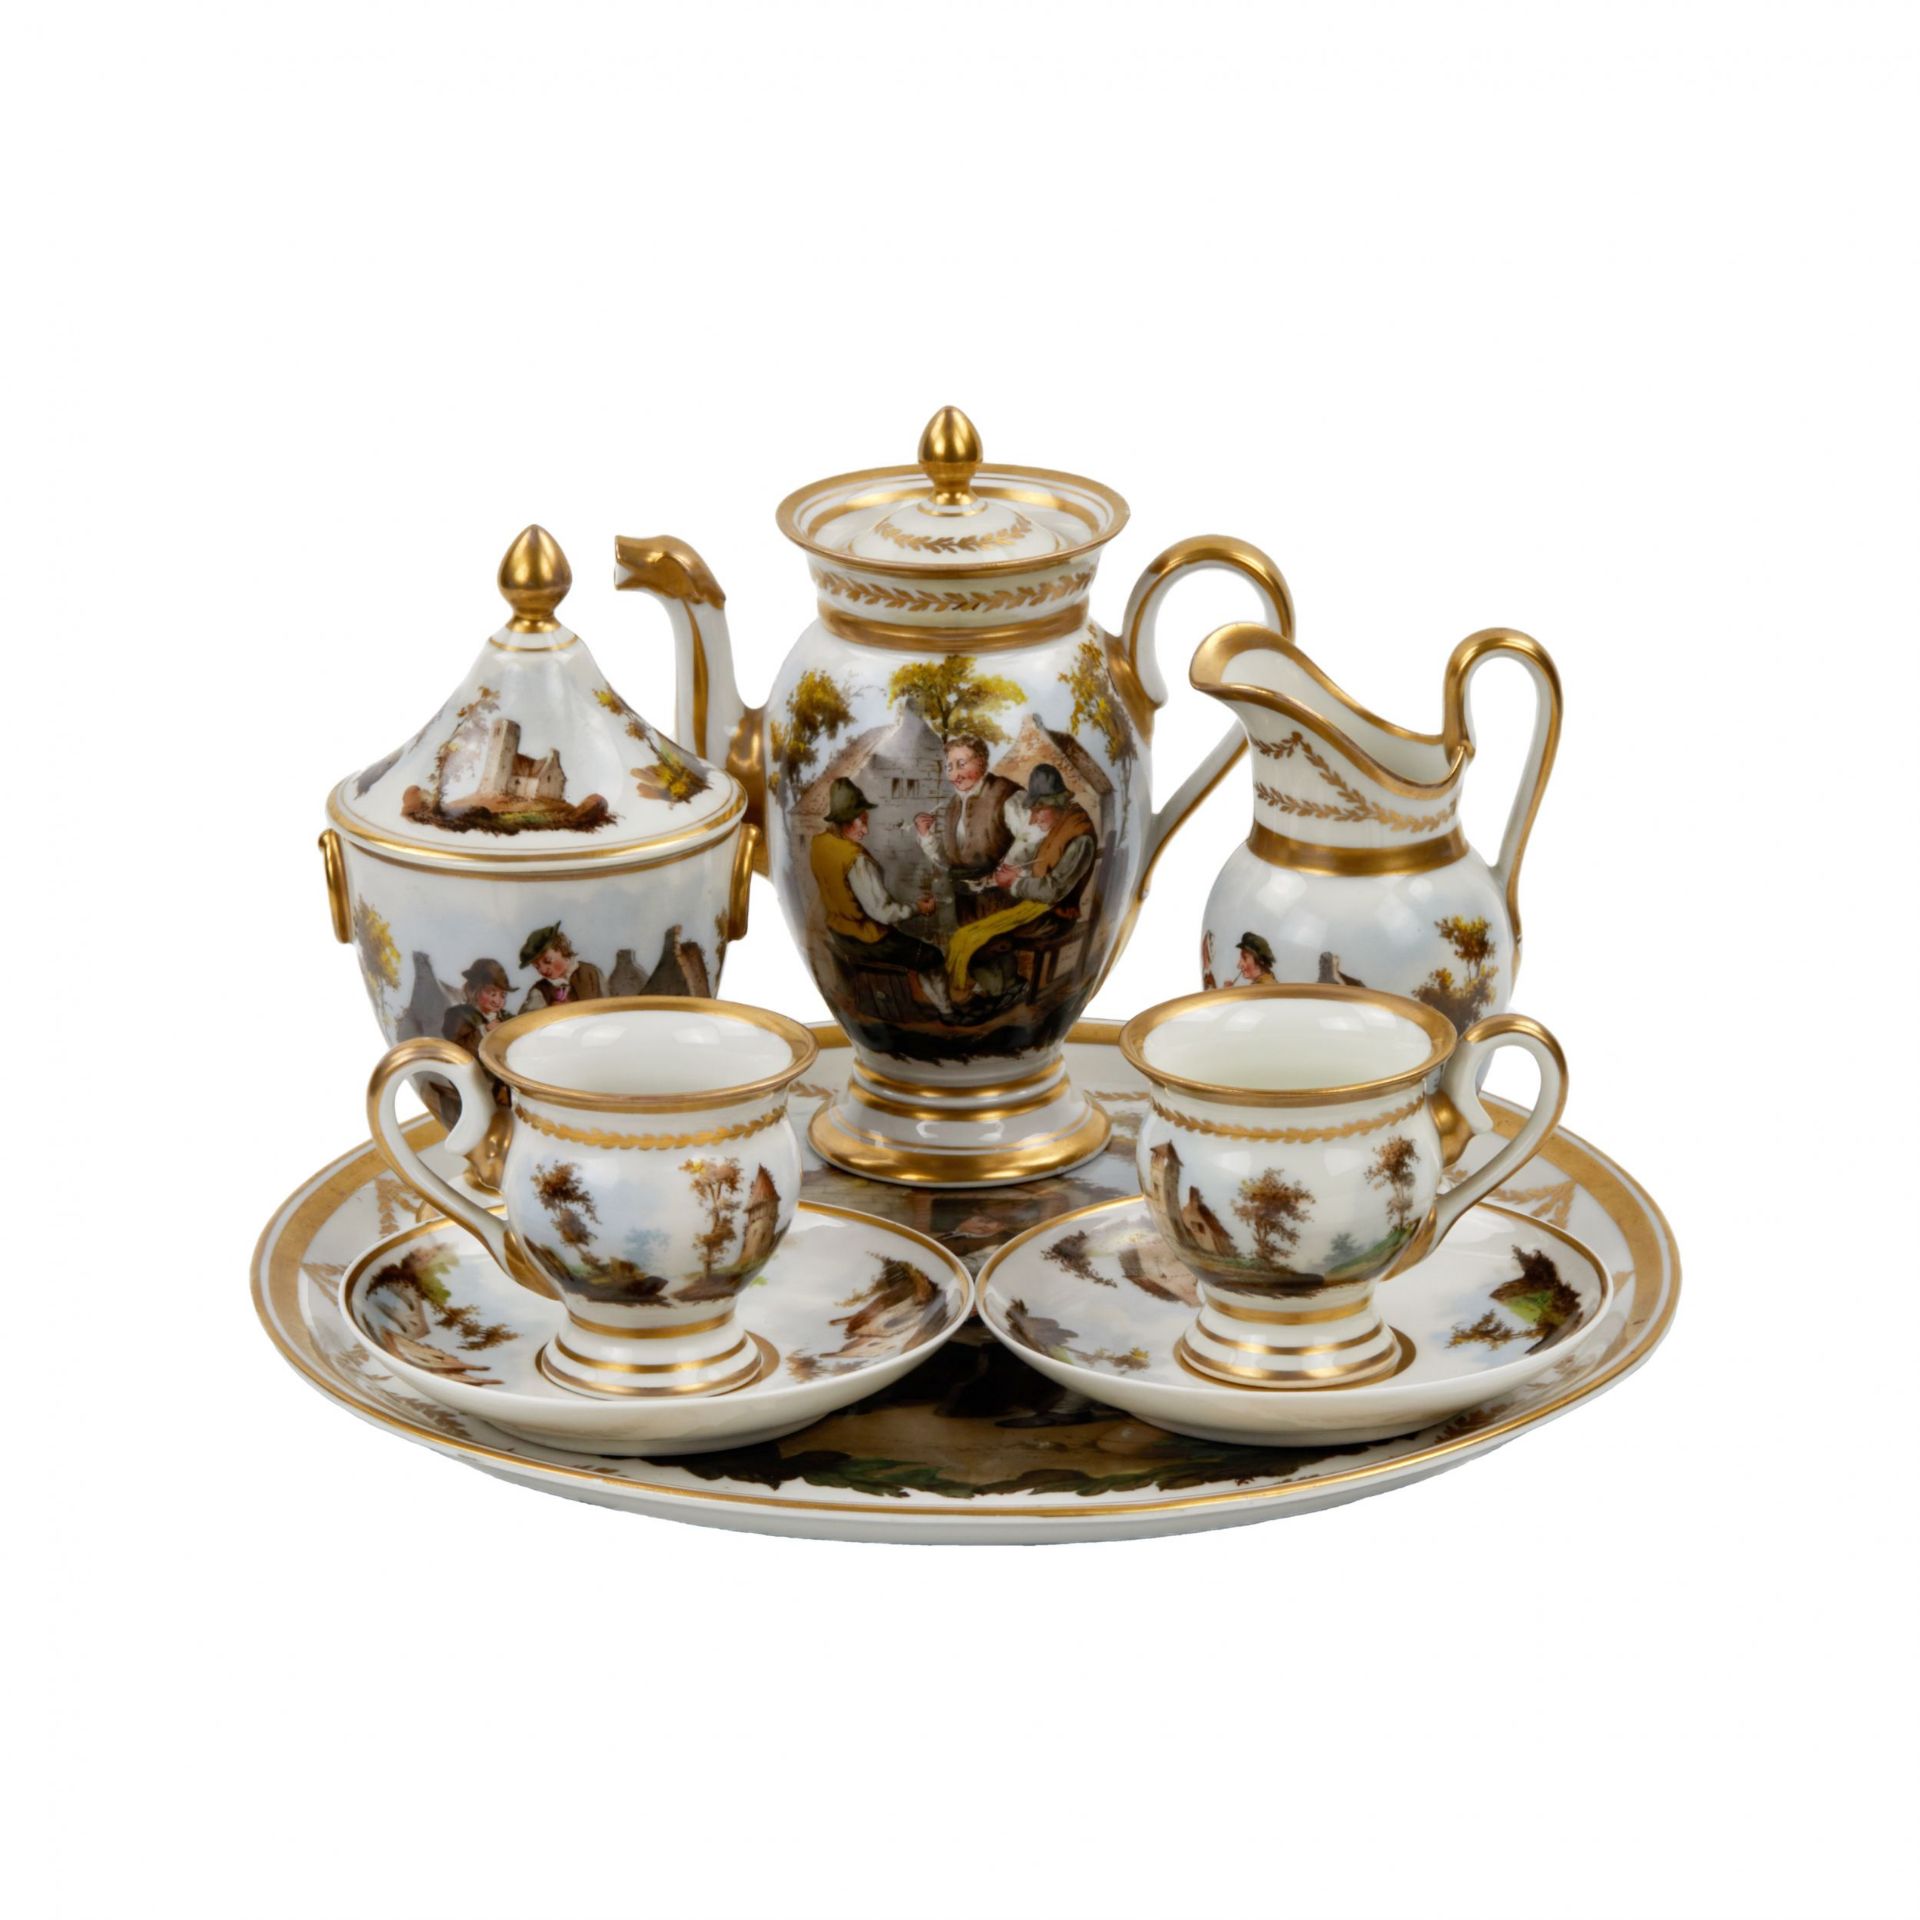 French tete-a-tete porcelain service, 19th century.